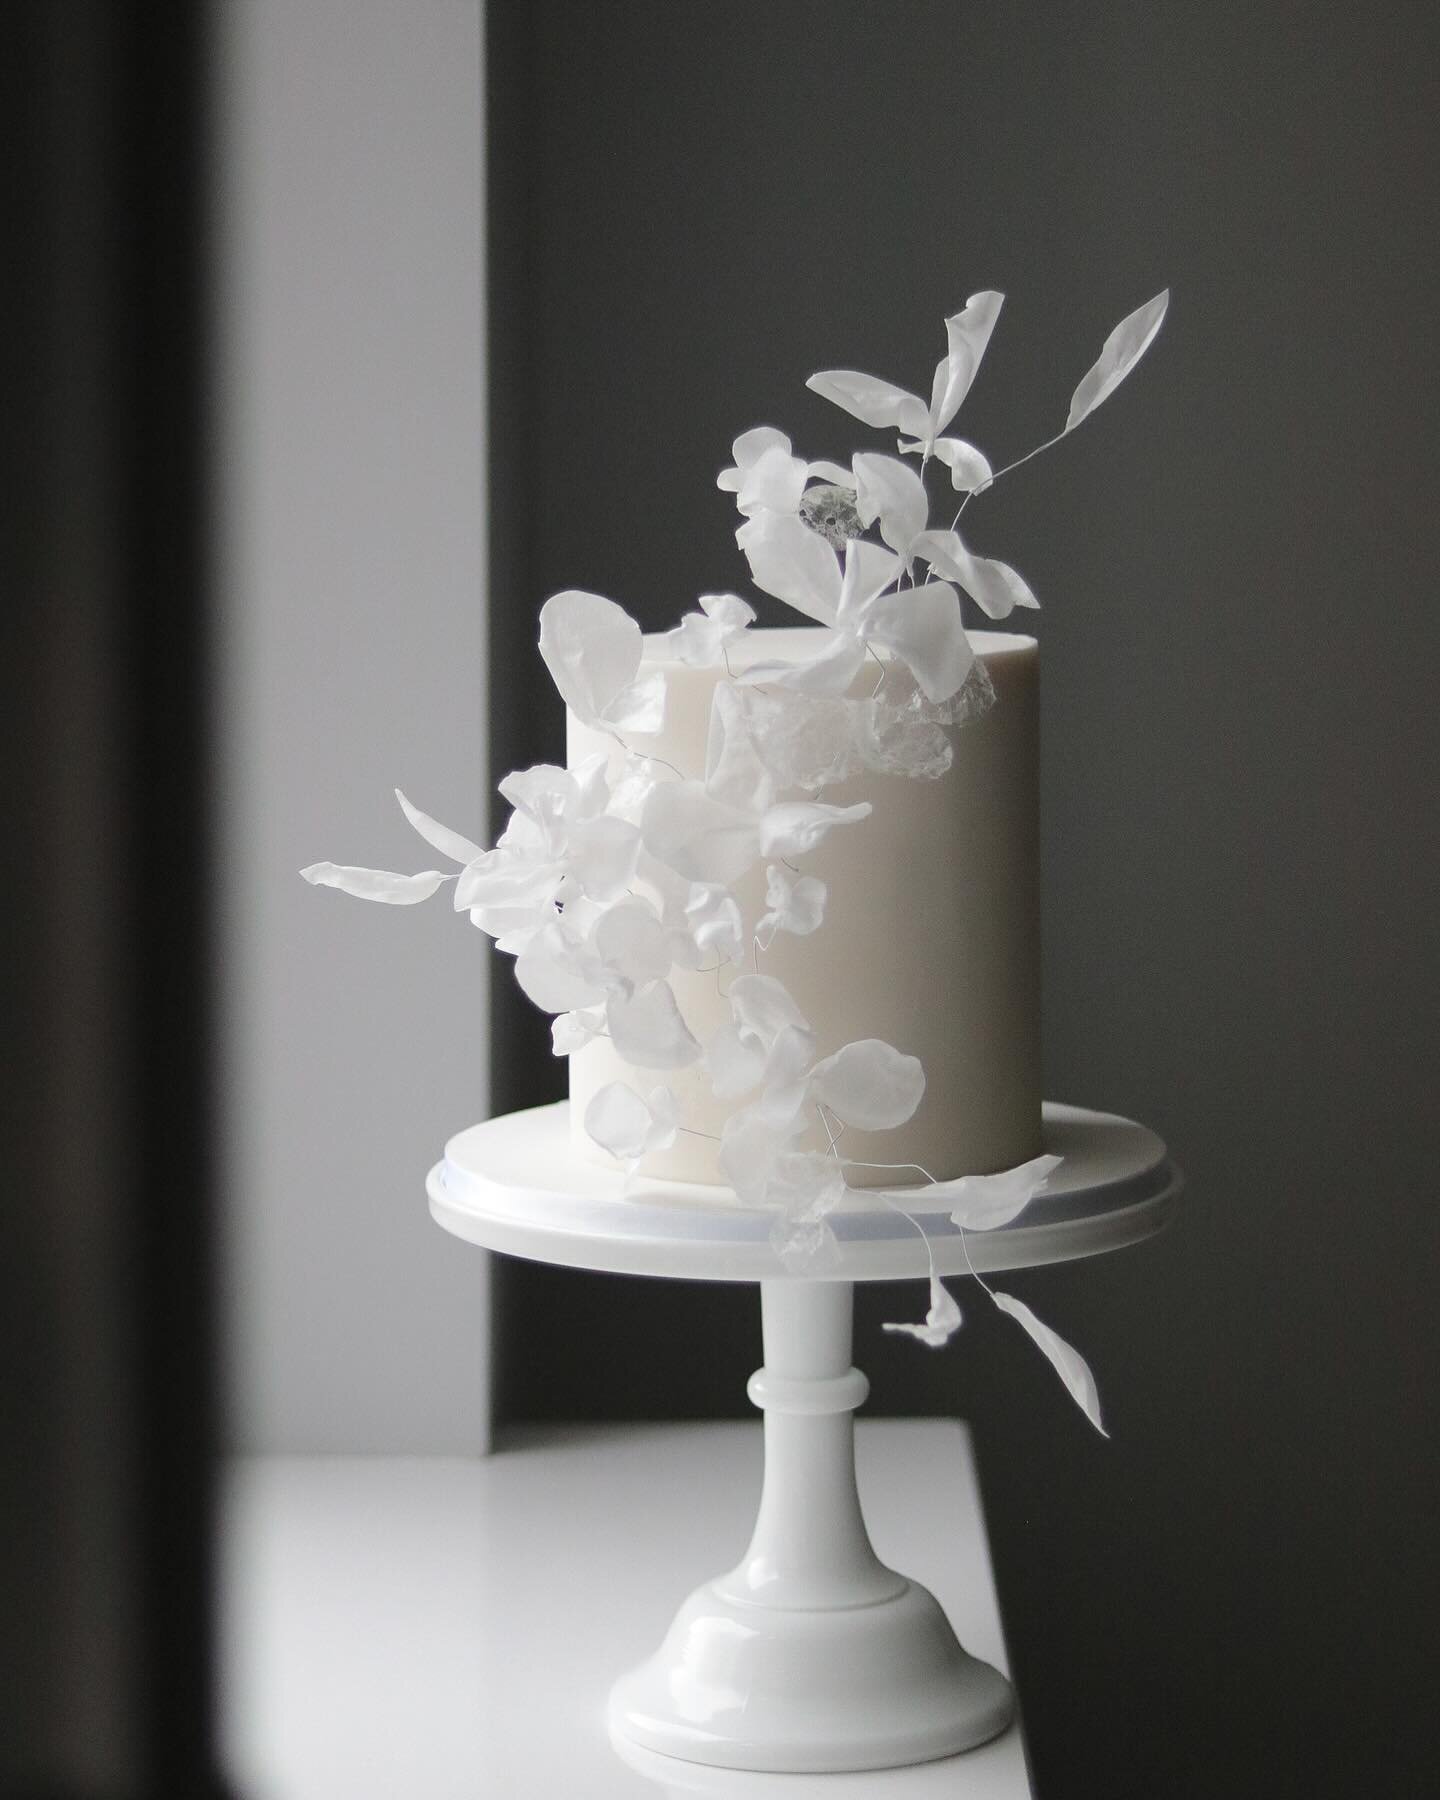 Little flawless cloud ☁️⁠
⁠
This is what this cake makes me think of 🥰⁠
.⁠
.⁠
.⁠
.⁠
.⁠
.⁠
.⁠
⁠
#wedding #weddings #weddingcake #weddingcakesupplier #weddingsupplier #luxuryweddings #destinationweddings #bespokeweddingcake #bespokewedding #weddingpla